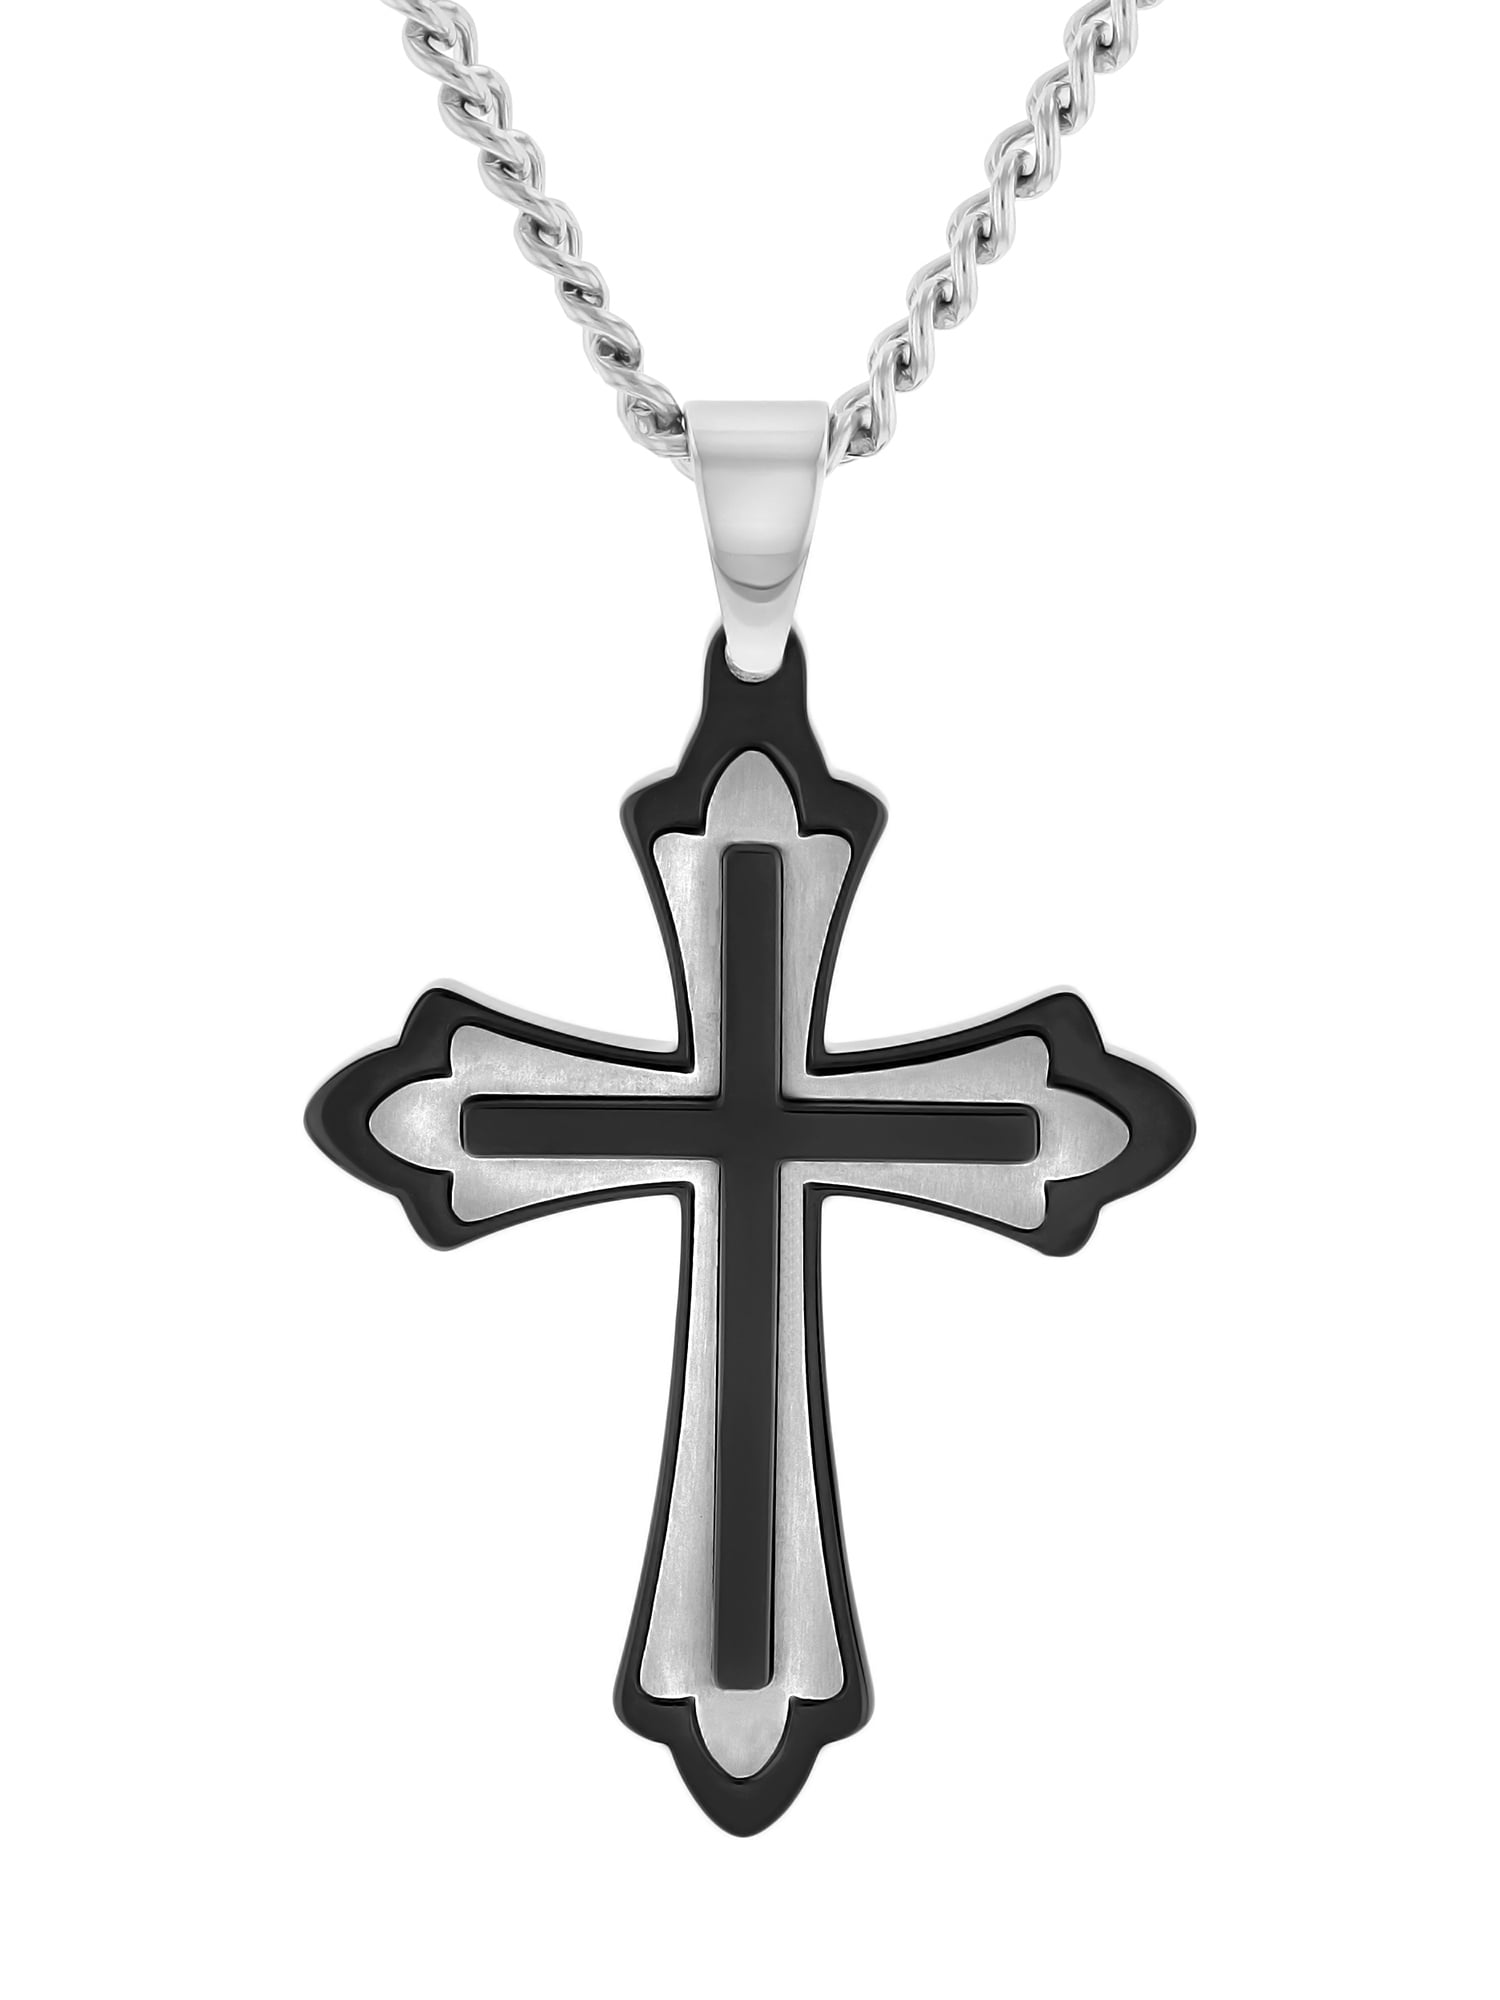 Believe by Brilliance Mens Stainless Steel Fleur de Lis Two Tone Cross Pendant Necklace Chain